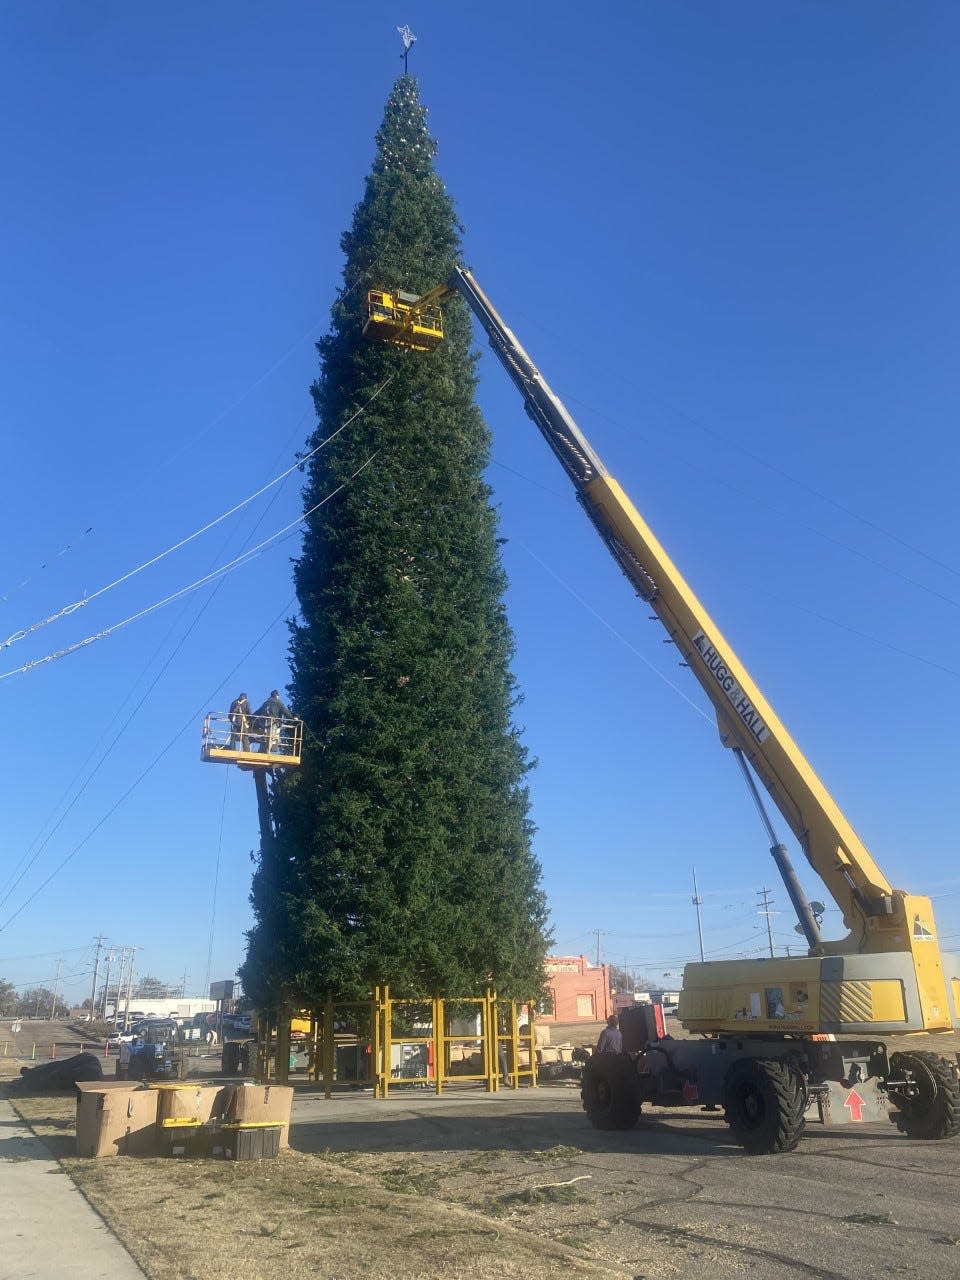 How the 'world's tallest freshcut Christmas tree' returned to Enid